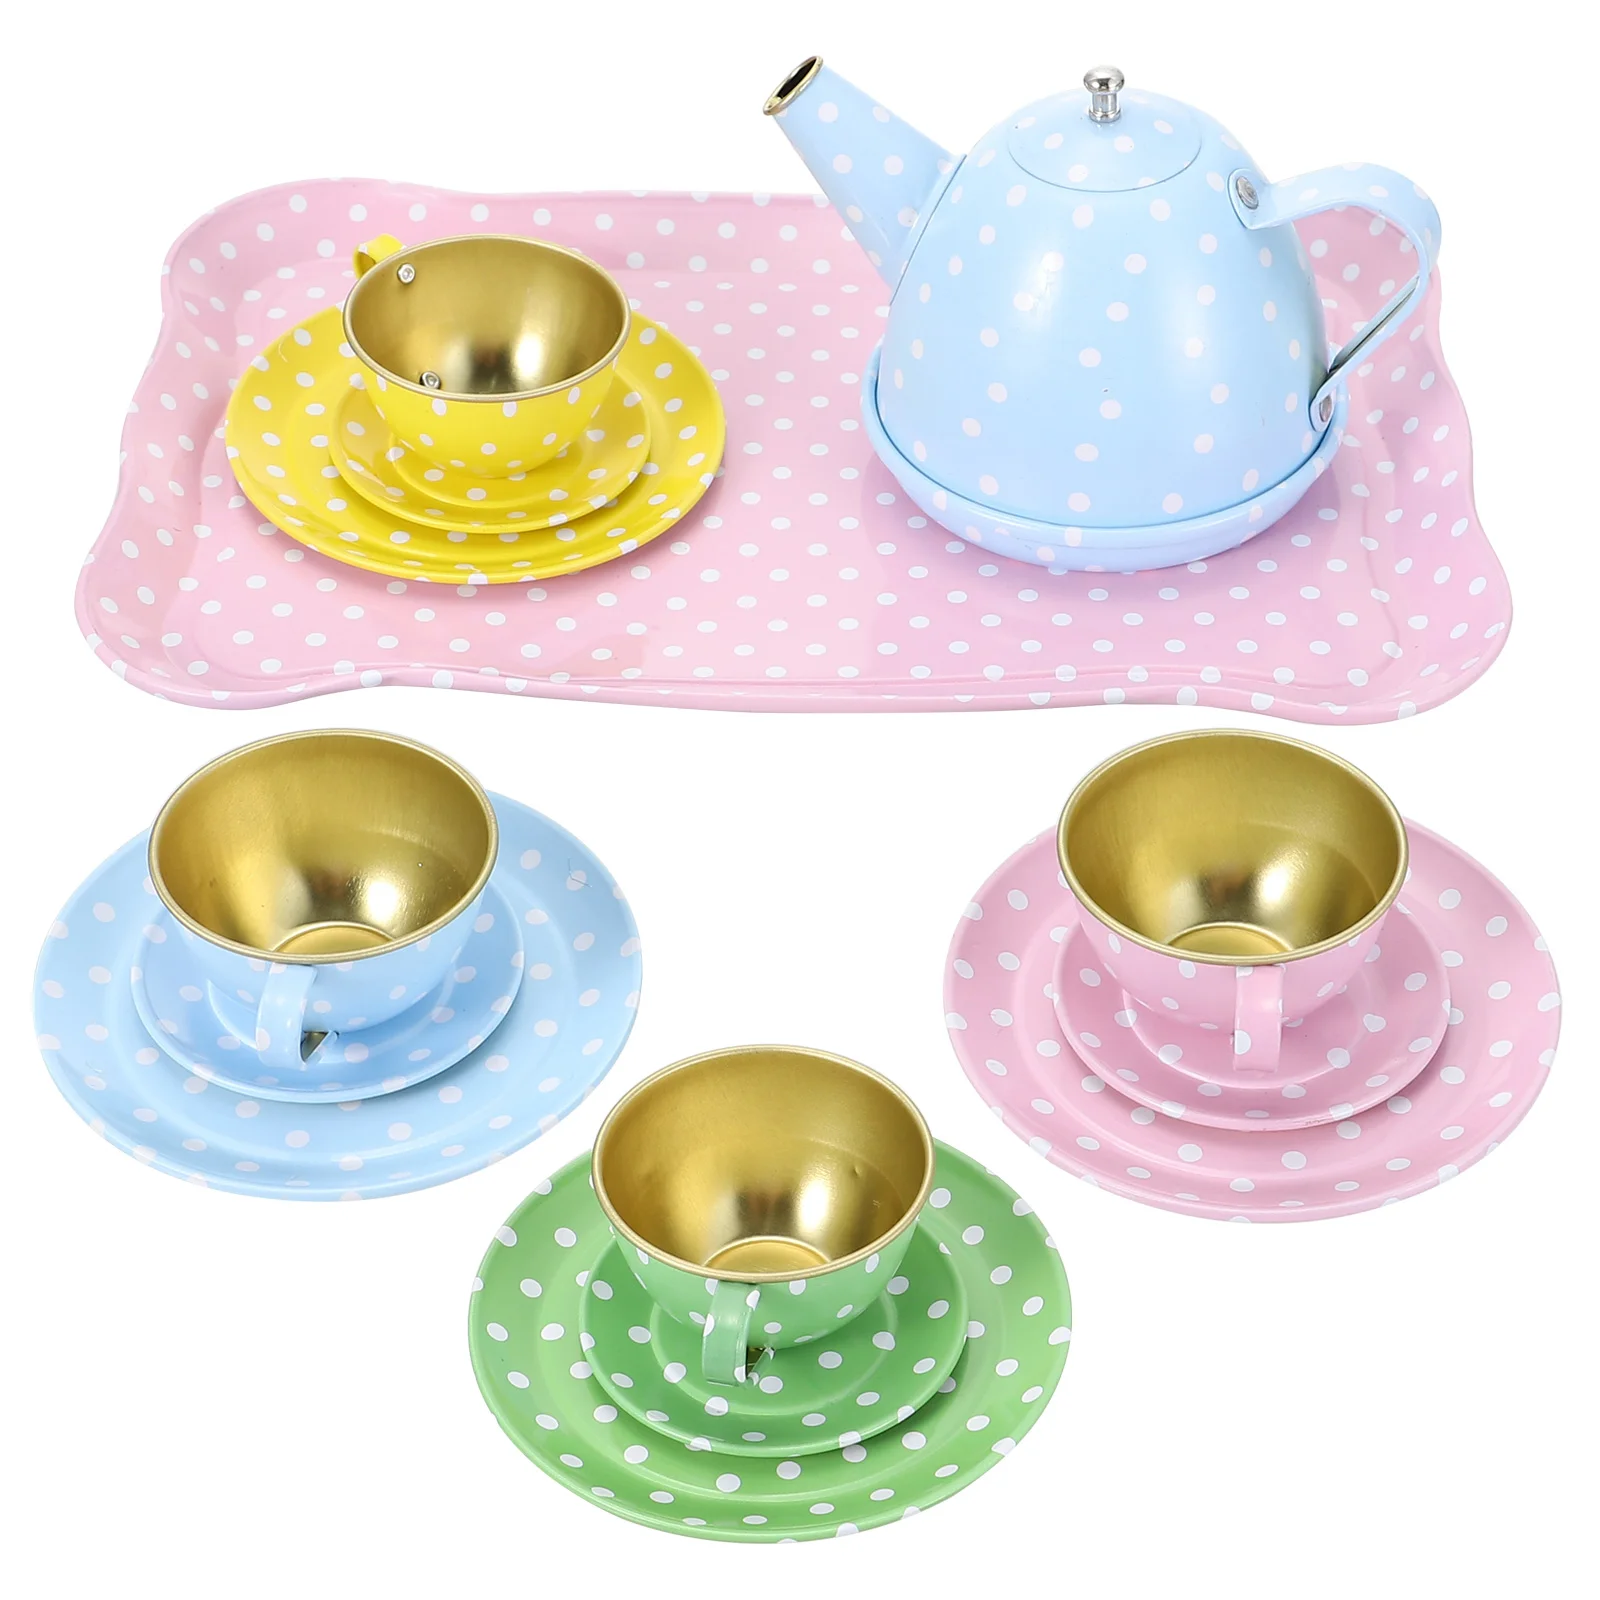 

Set/15pcs House Decorations Accessories Mini Tea Ware Simulation Kitchen Children Children’s Toy Tea Kit Tinplate